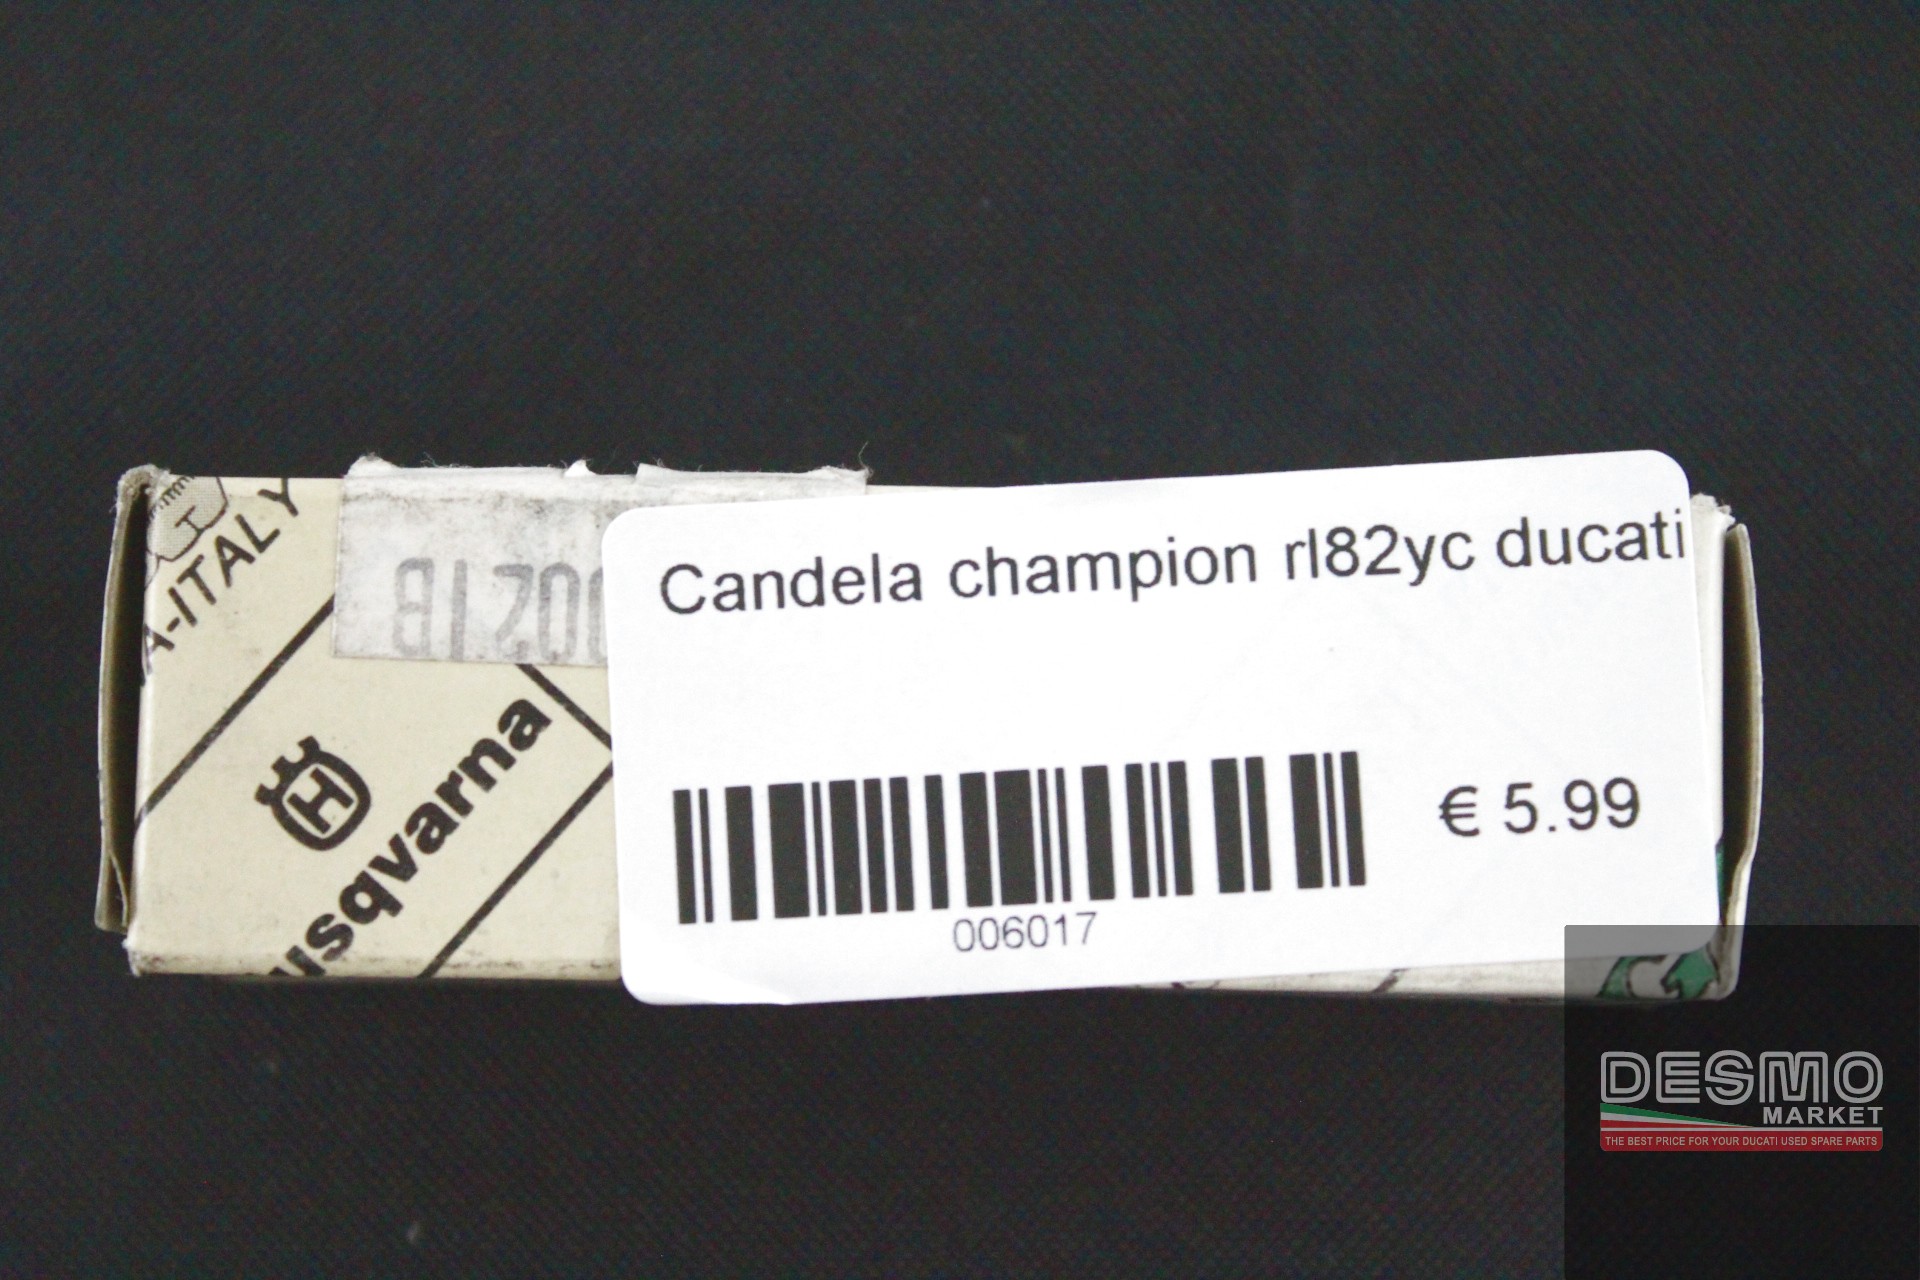 Candela champion rl82yc ducati